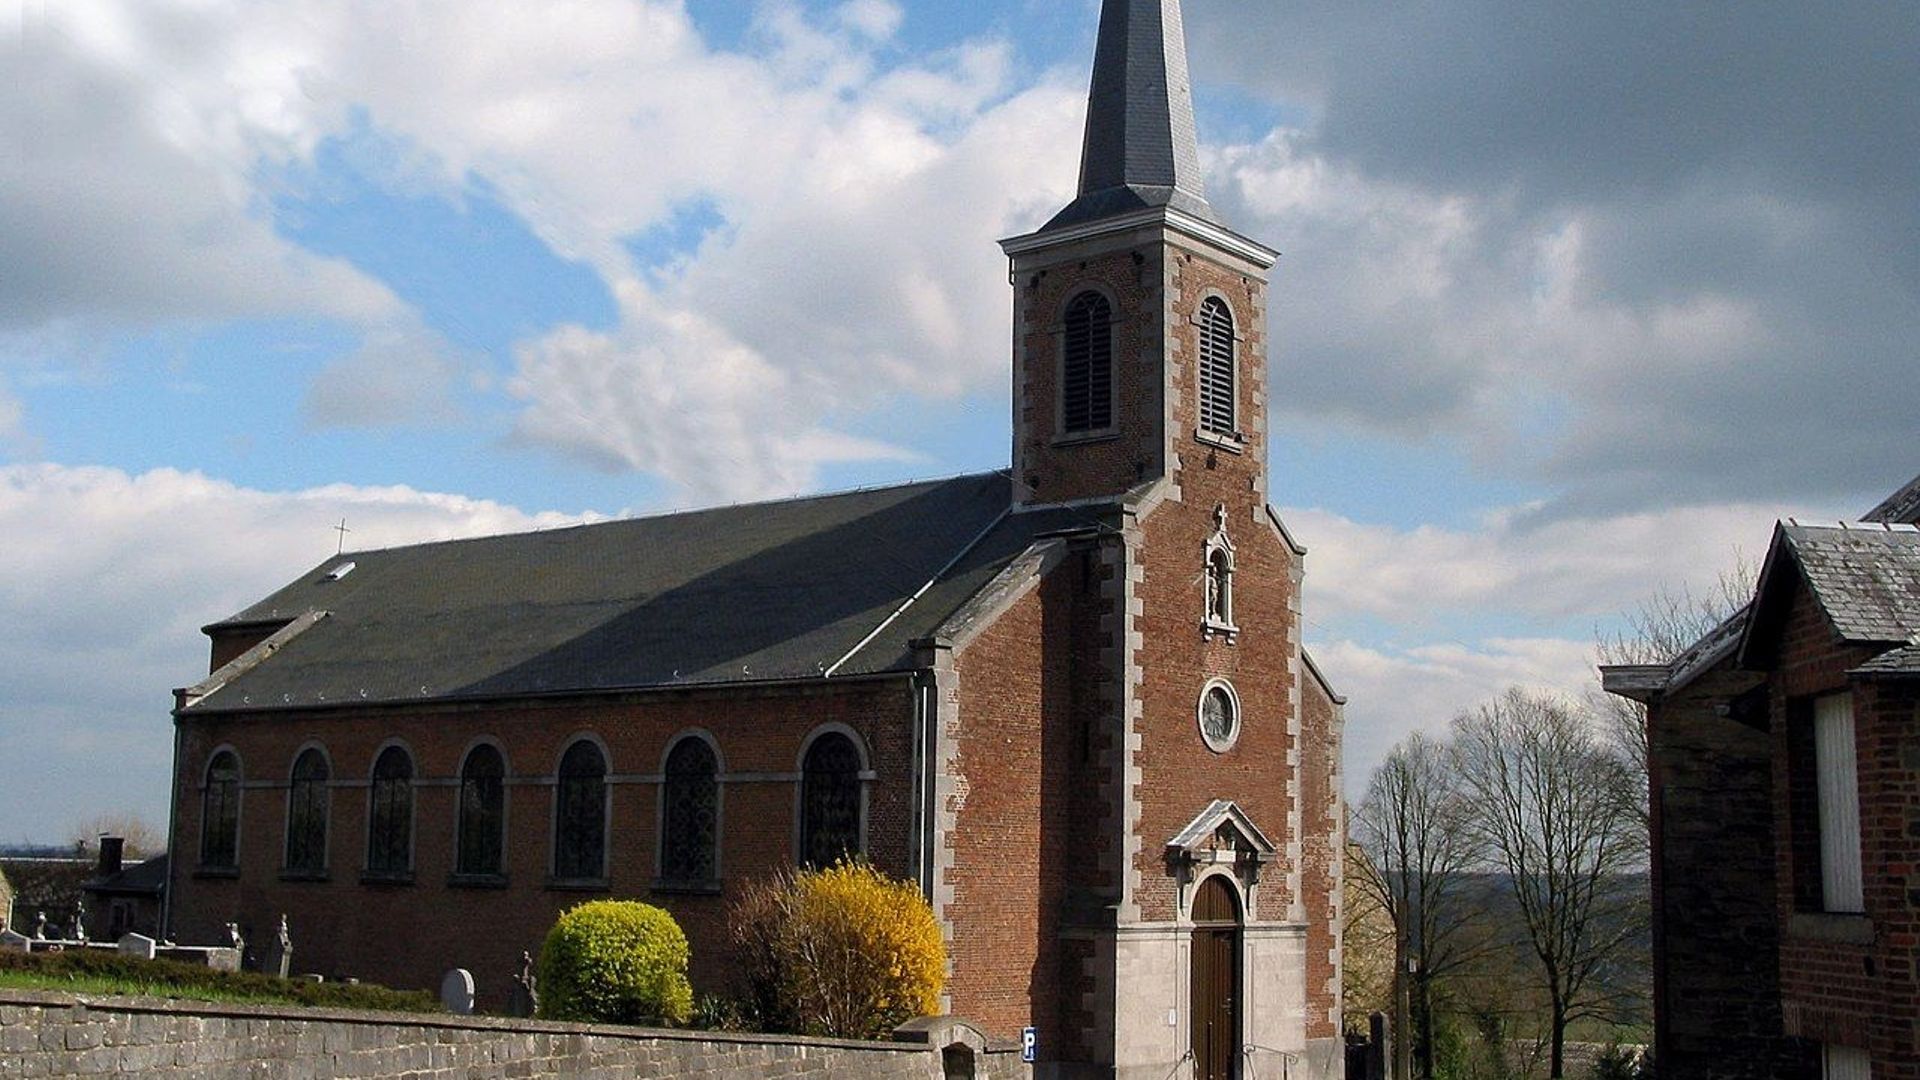 L’église Saint-Hubert